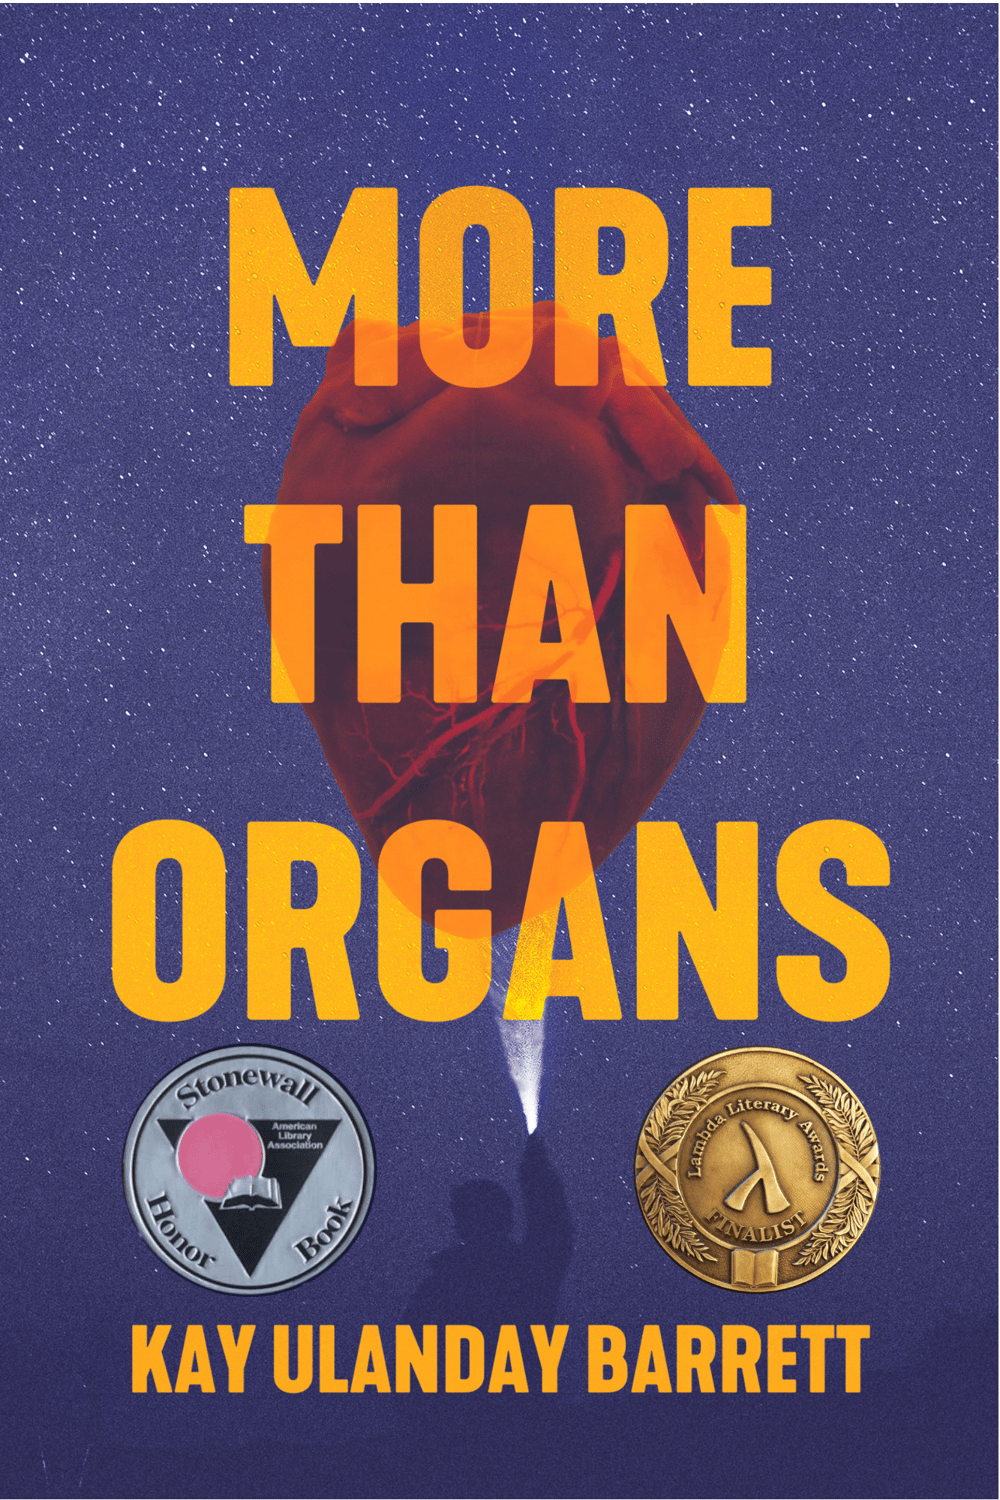 More Than Organs by Kay Ulanday Barrett (ALA Stonewall Honor Book/Lammy Finalist)